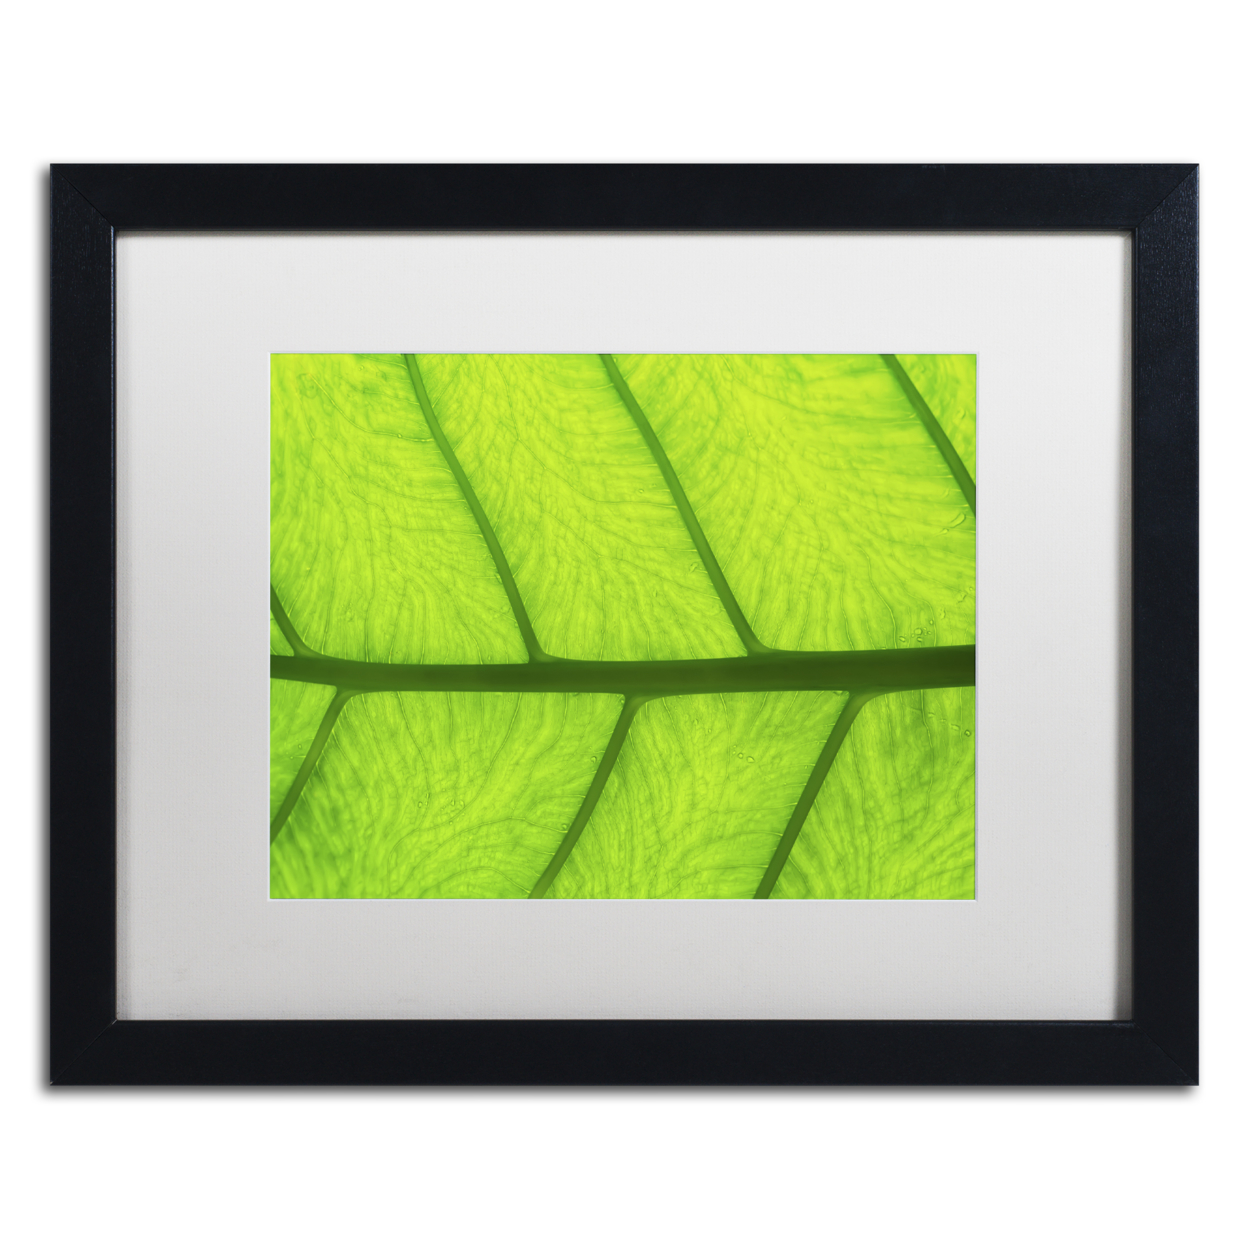 Cora Niele 'Leaf Texture III' Black Wooden Framed Art 18 X 22 Inches